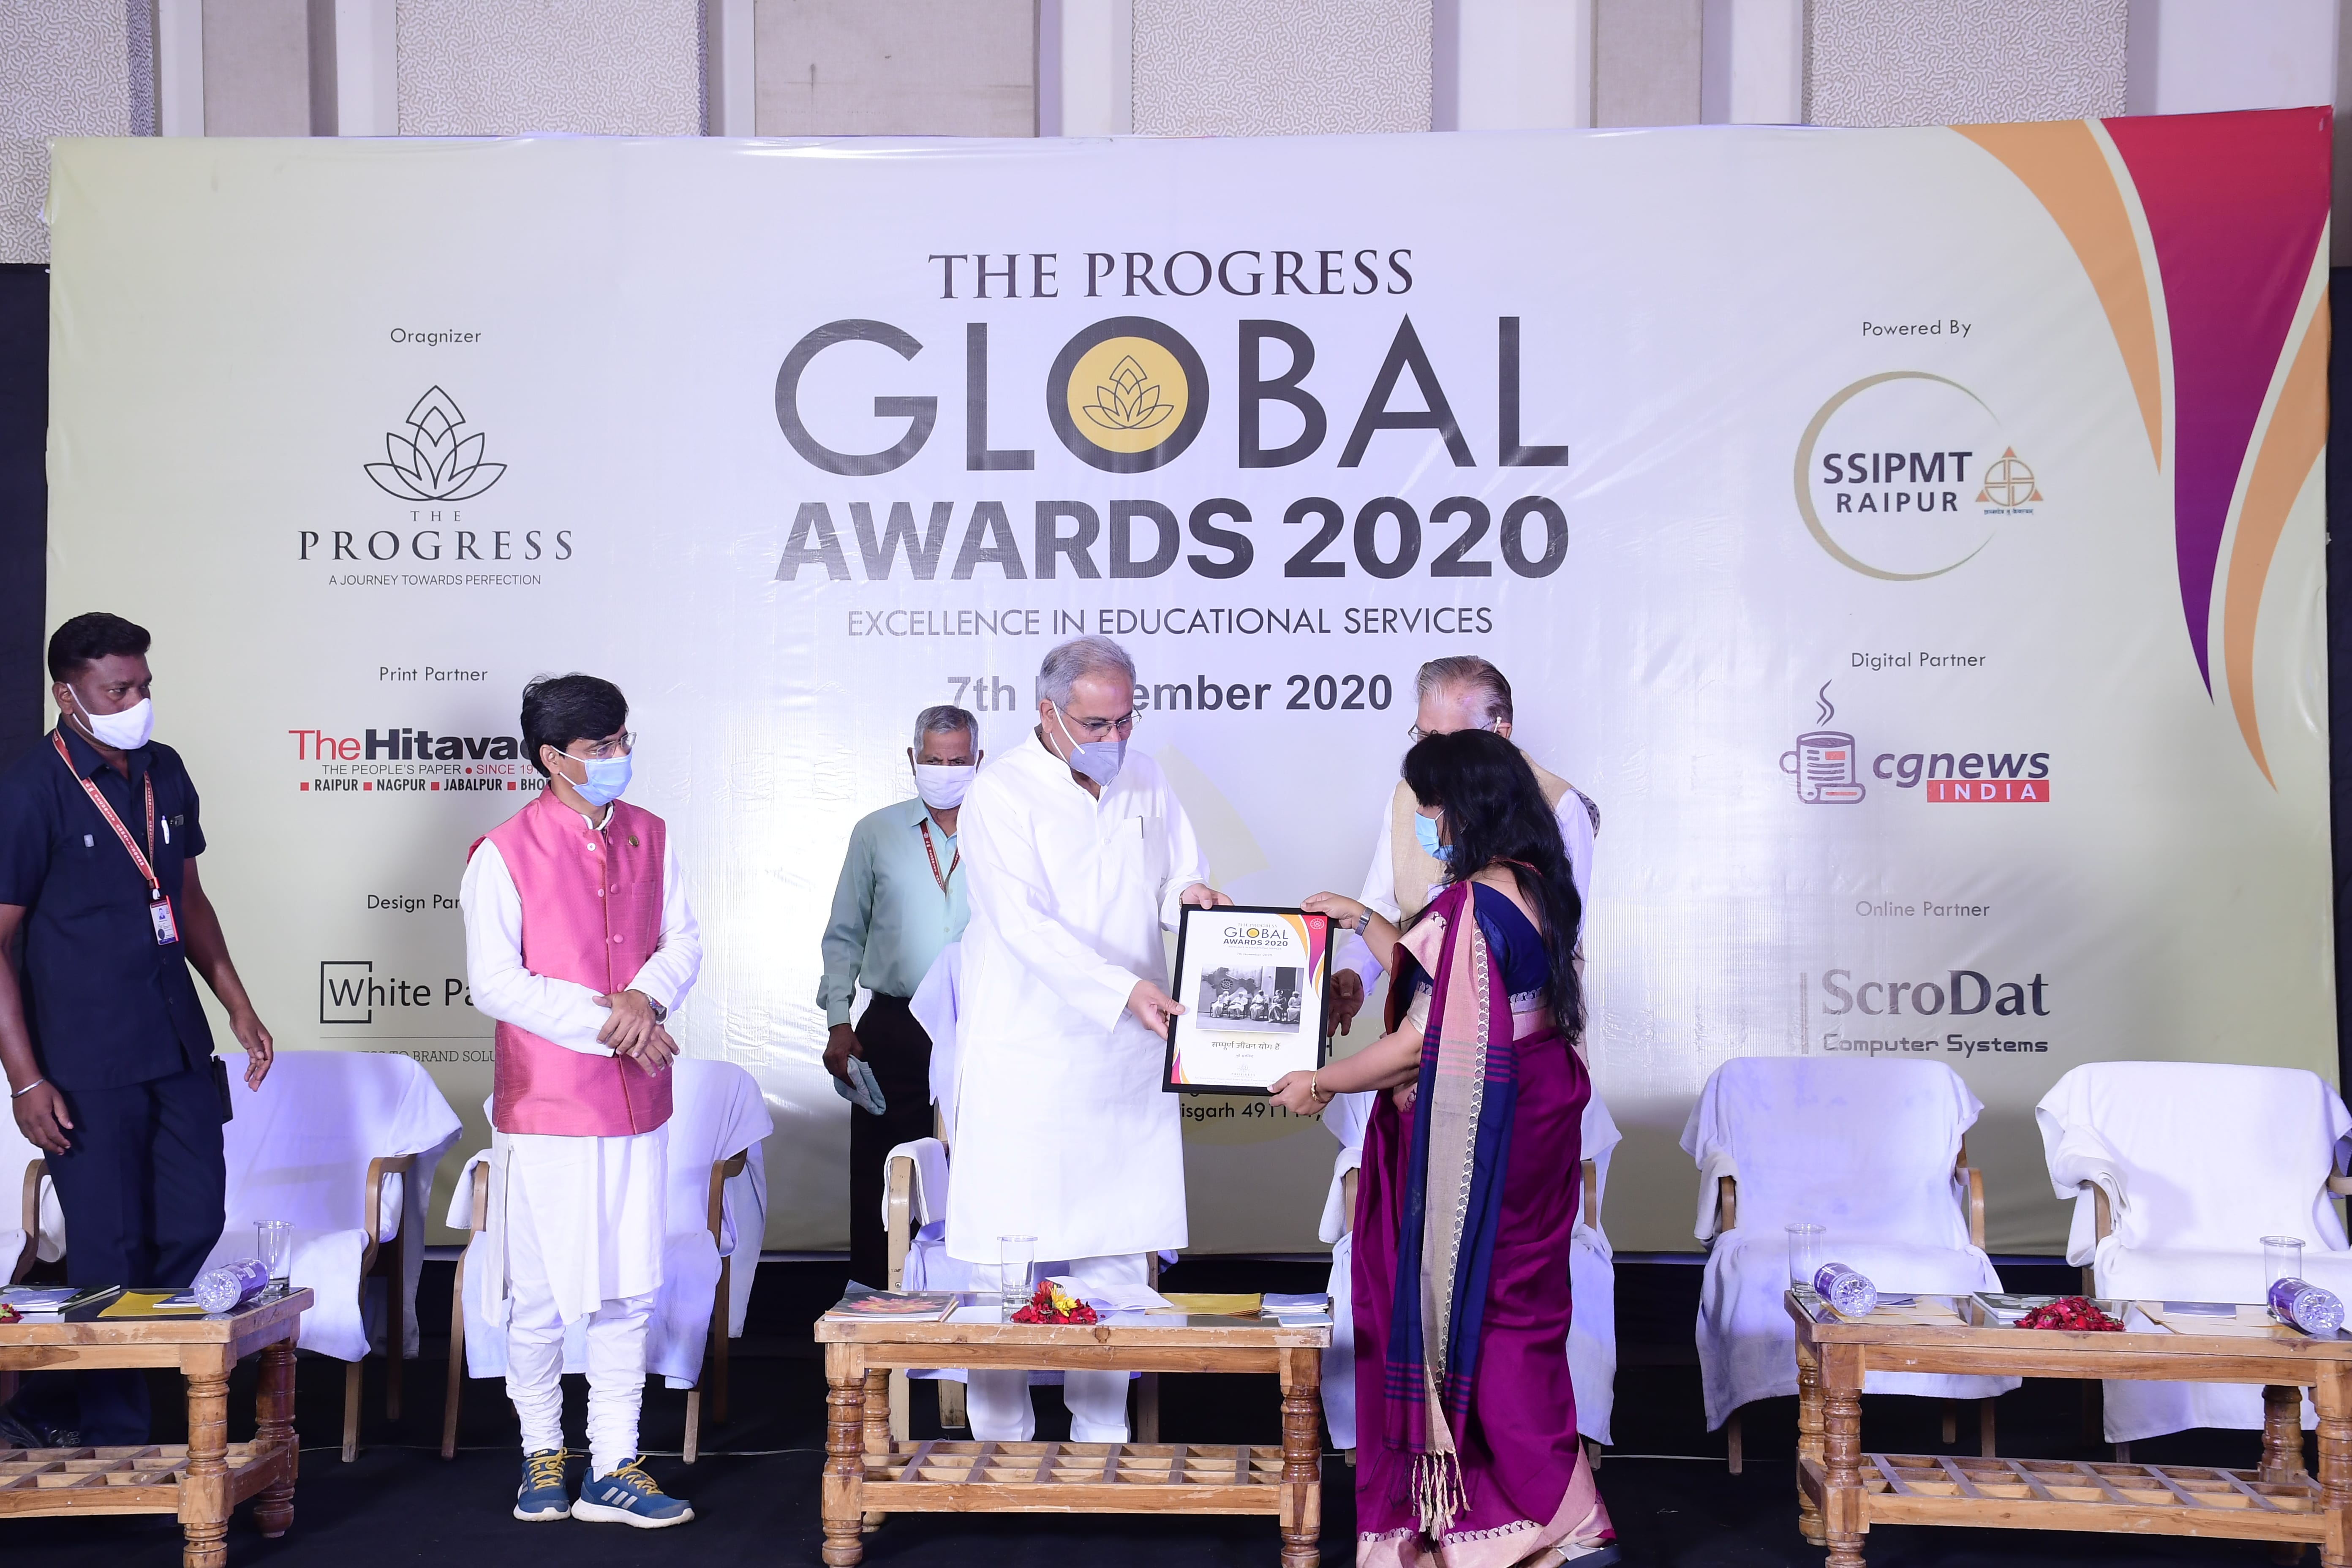 The Progress Global Awards 2020